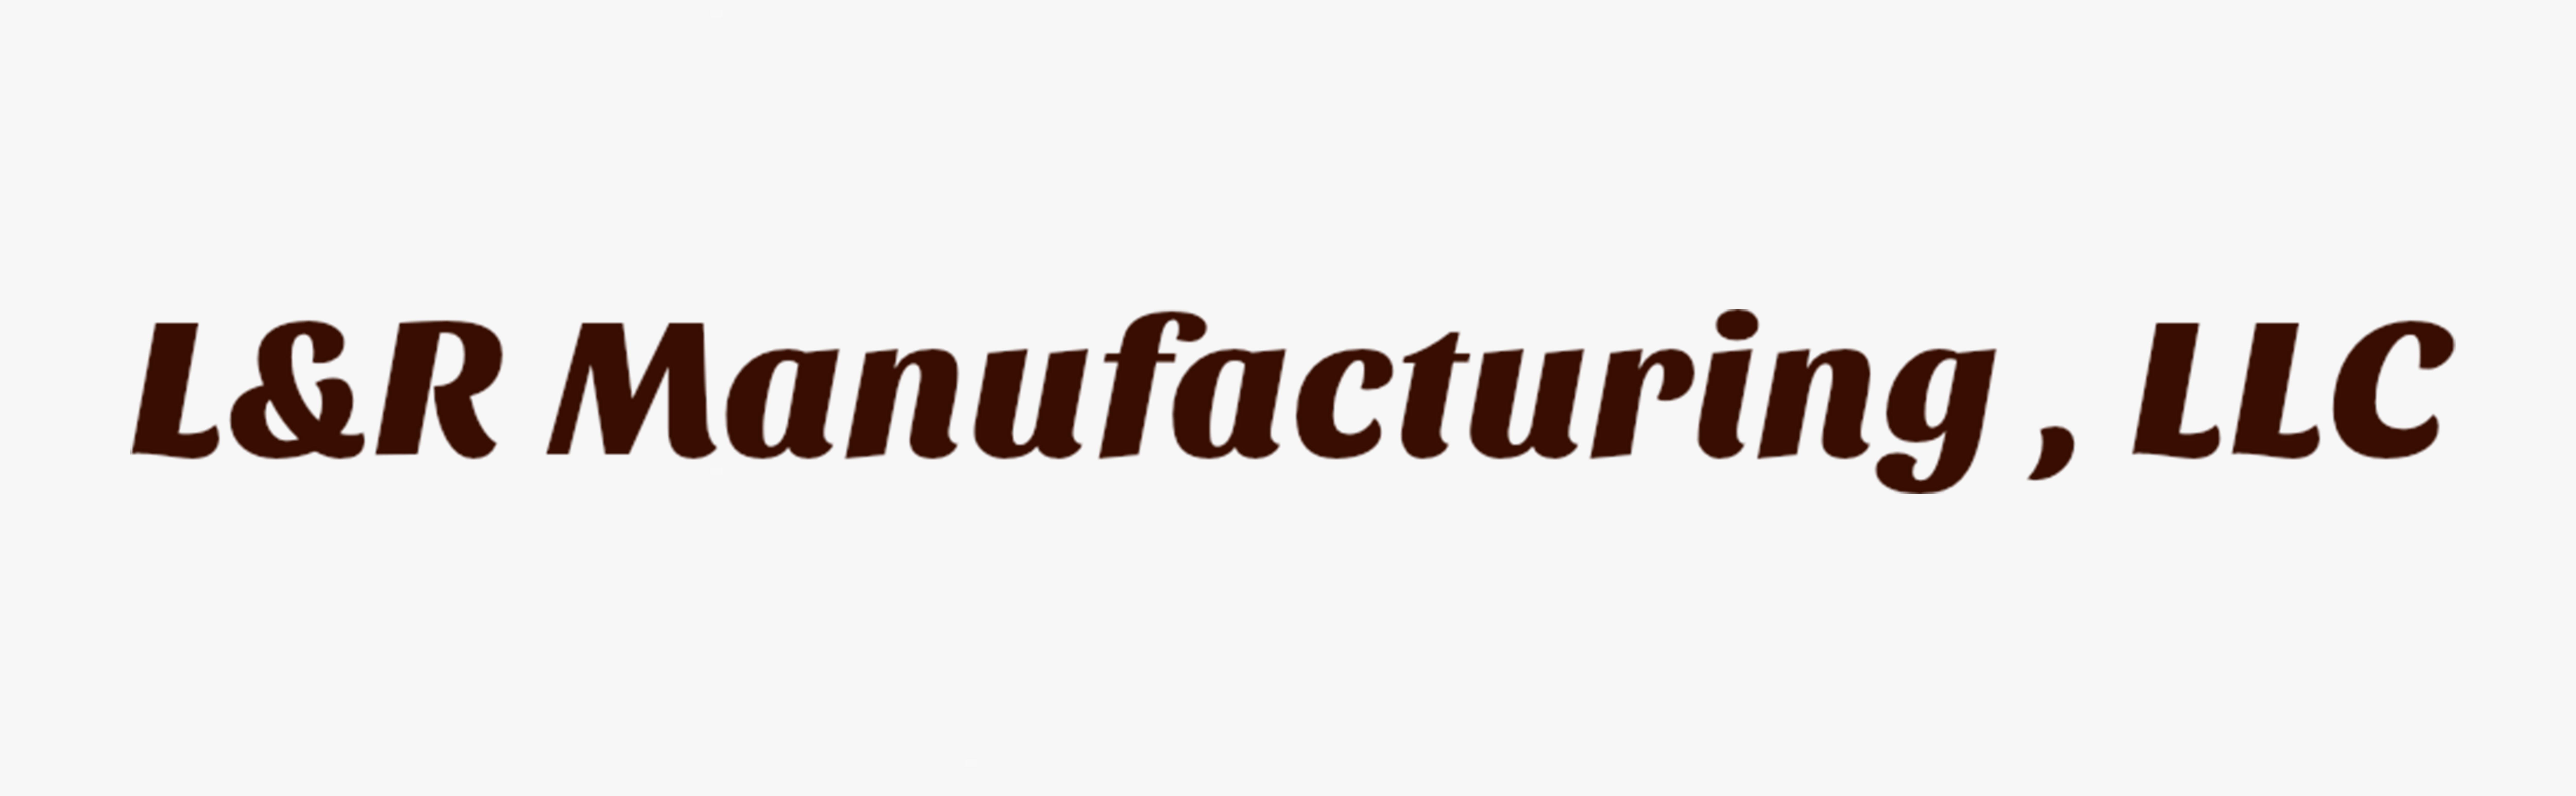 L&R Manufacturing Company